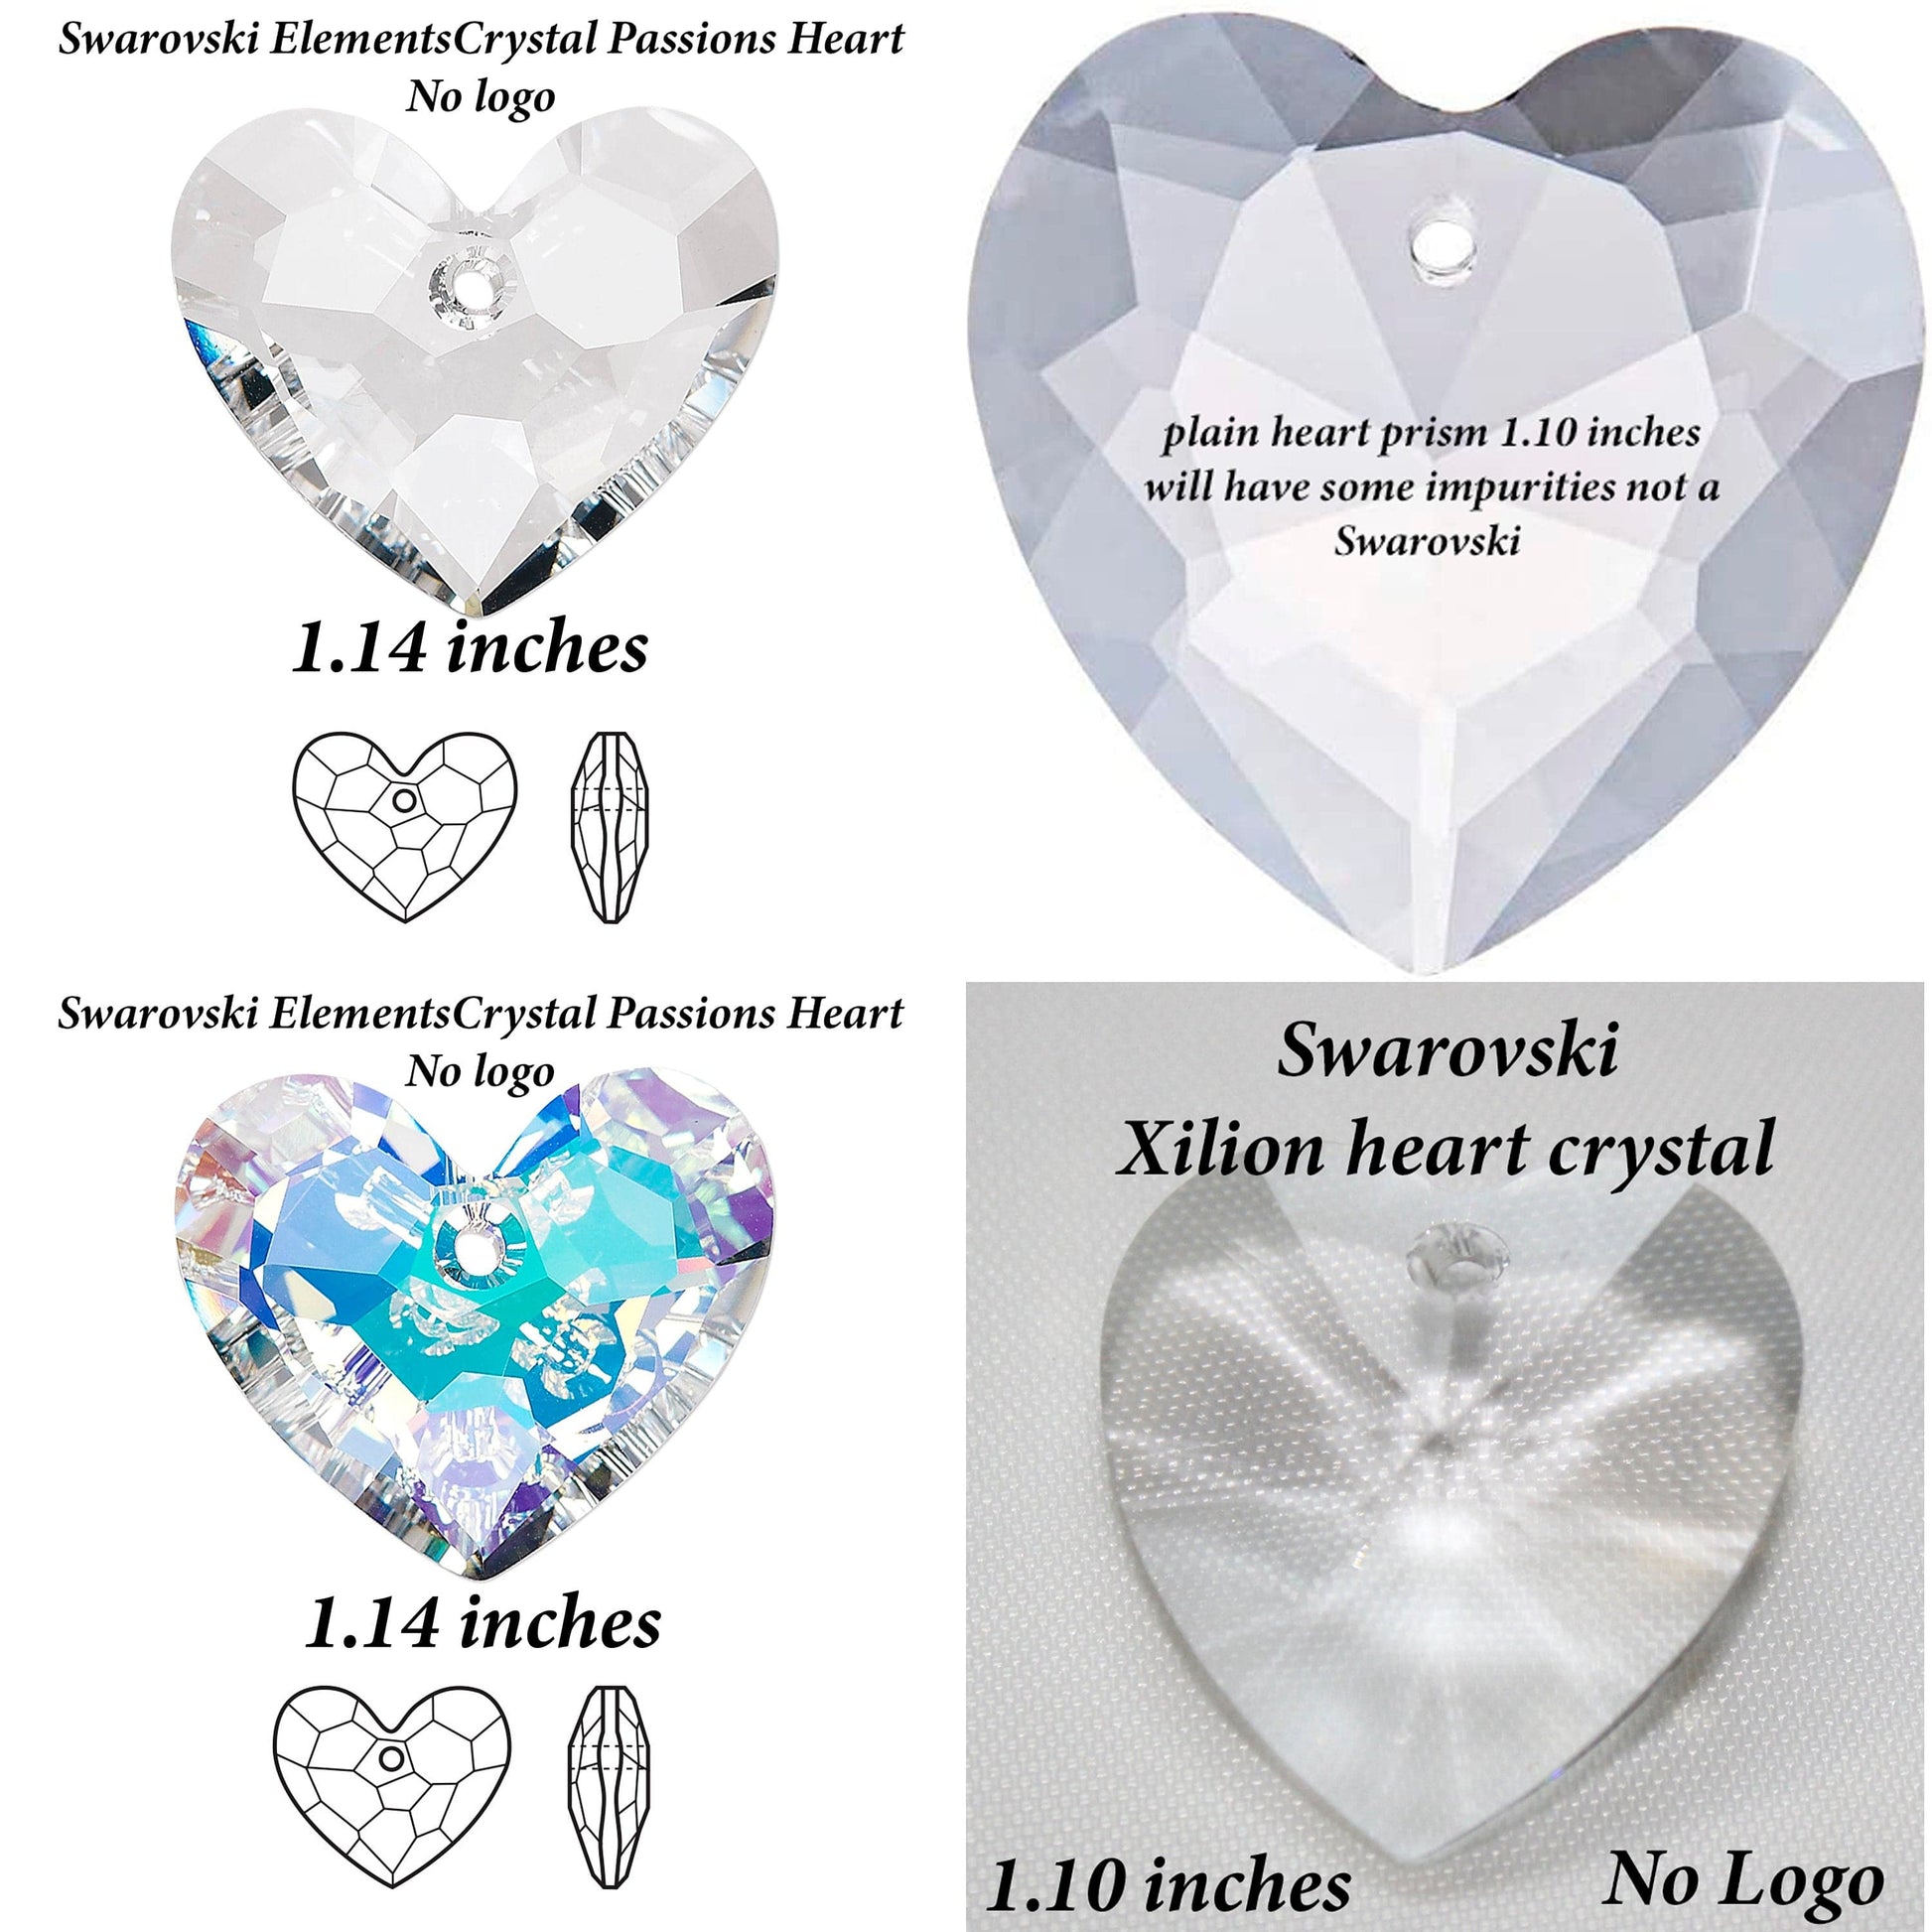 Heart Prisms
Swarovski Clear 1.14”
Swarovski Crystal Passions 1.14”
Swarovski Xilion 1.10”
Plain heart 1.10”